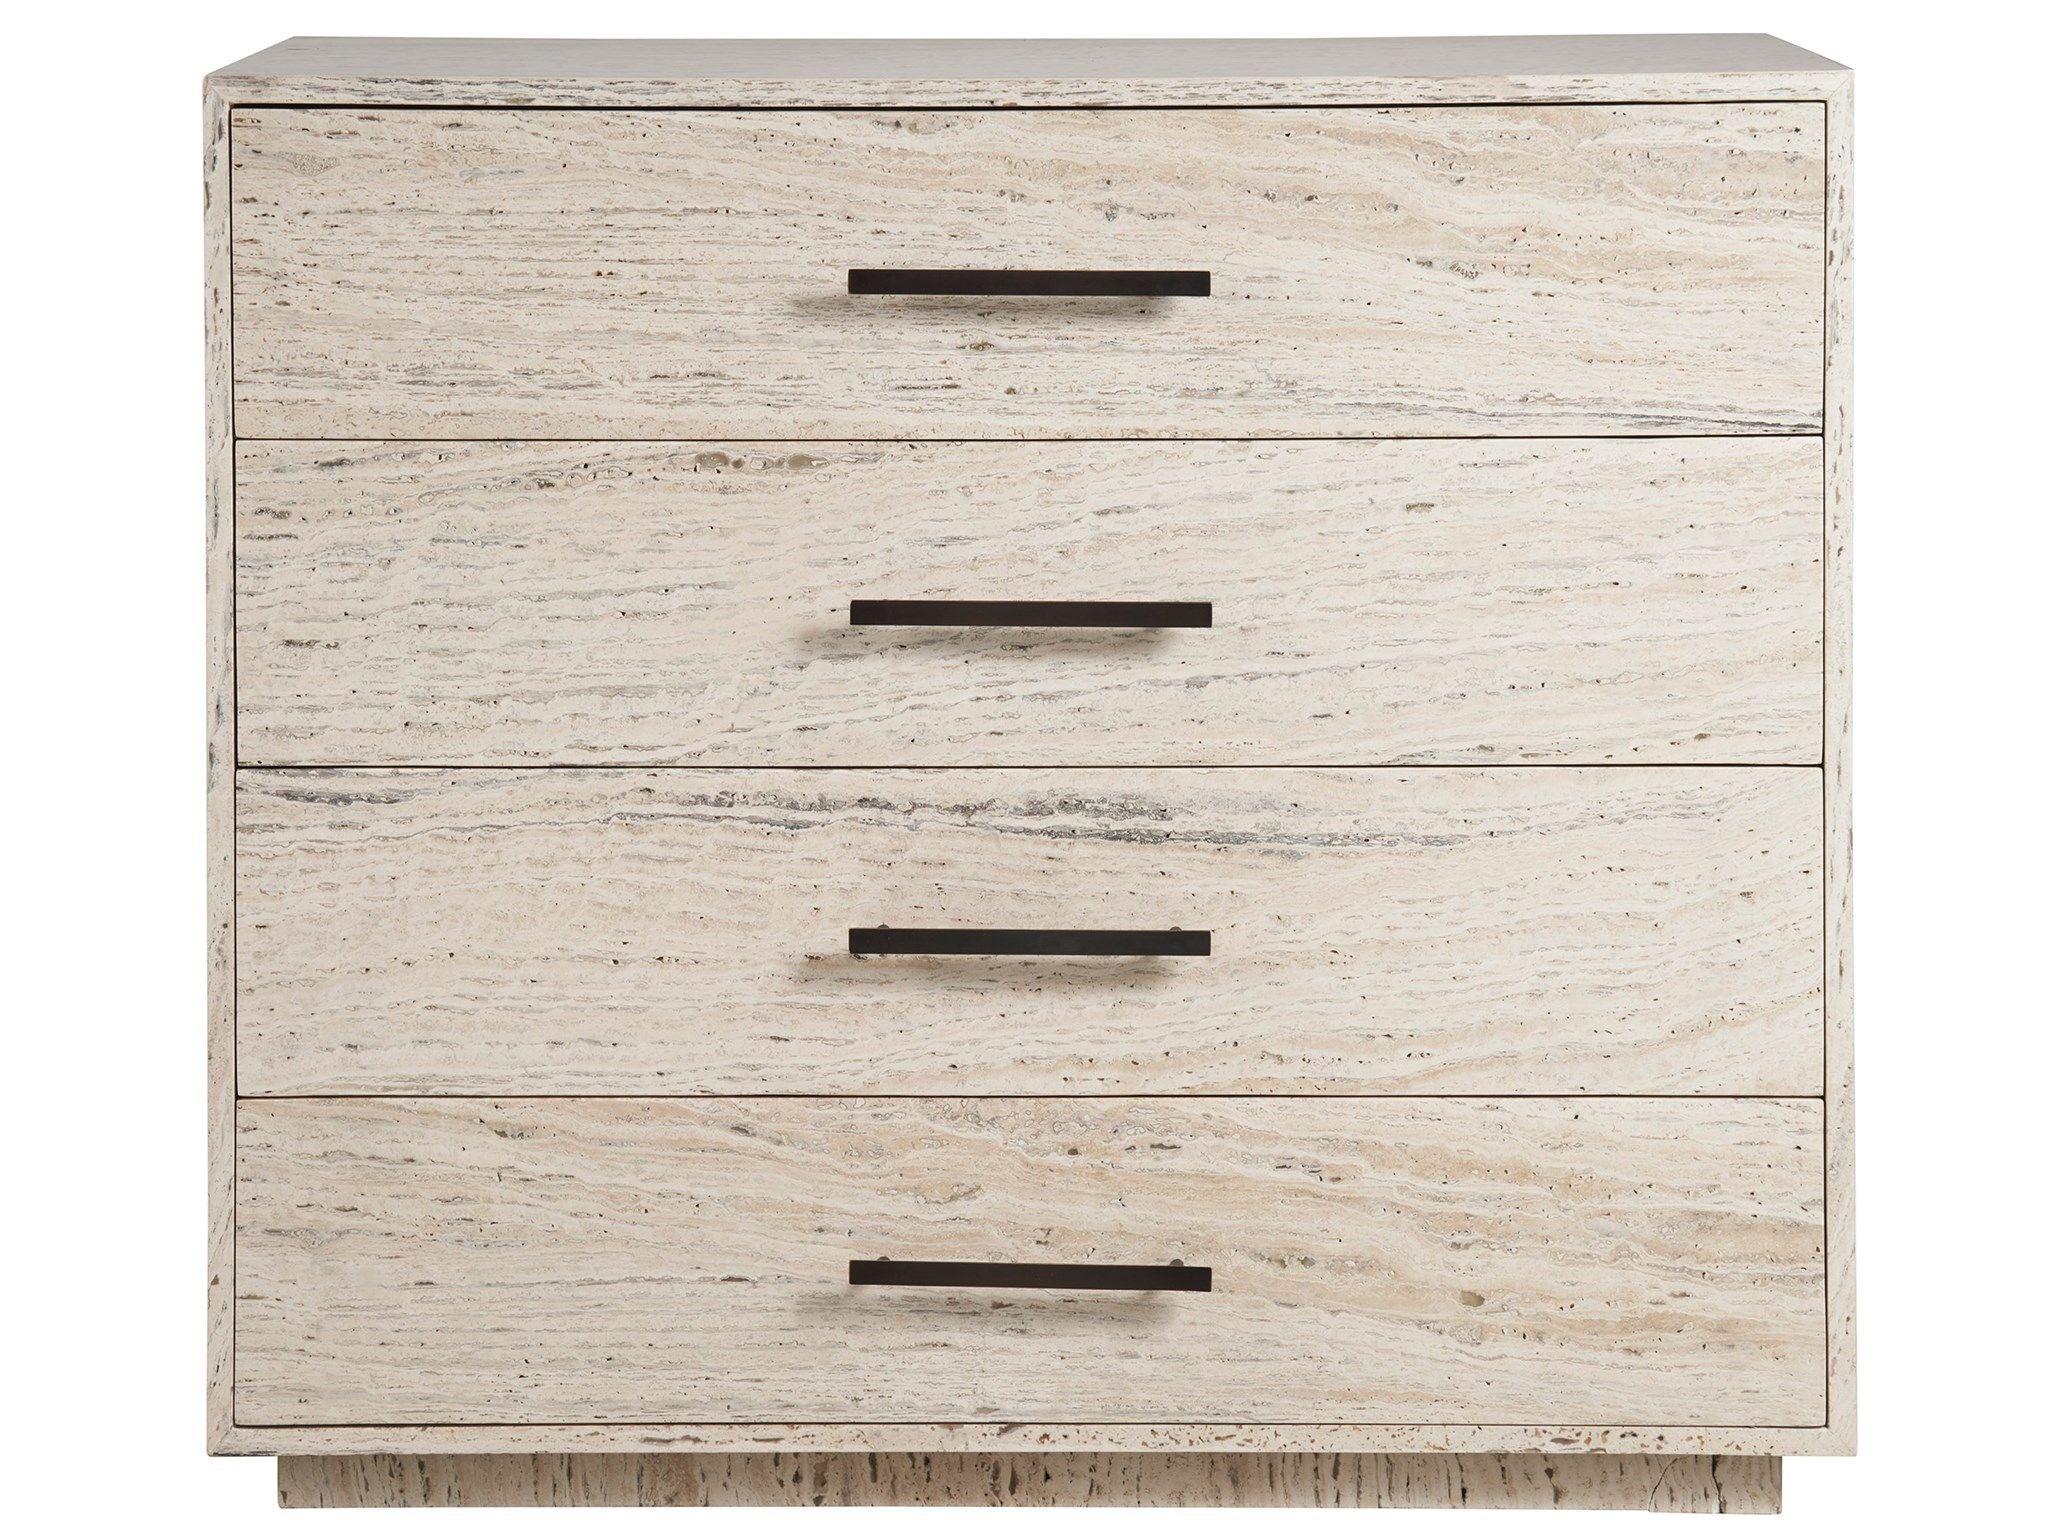 Universal Furniture - New Modern - Dove Drawer Chest - Beige - 5th Avenue Furniture